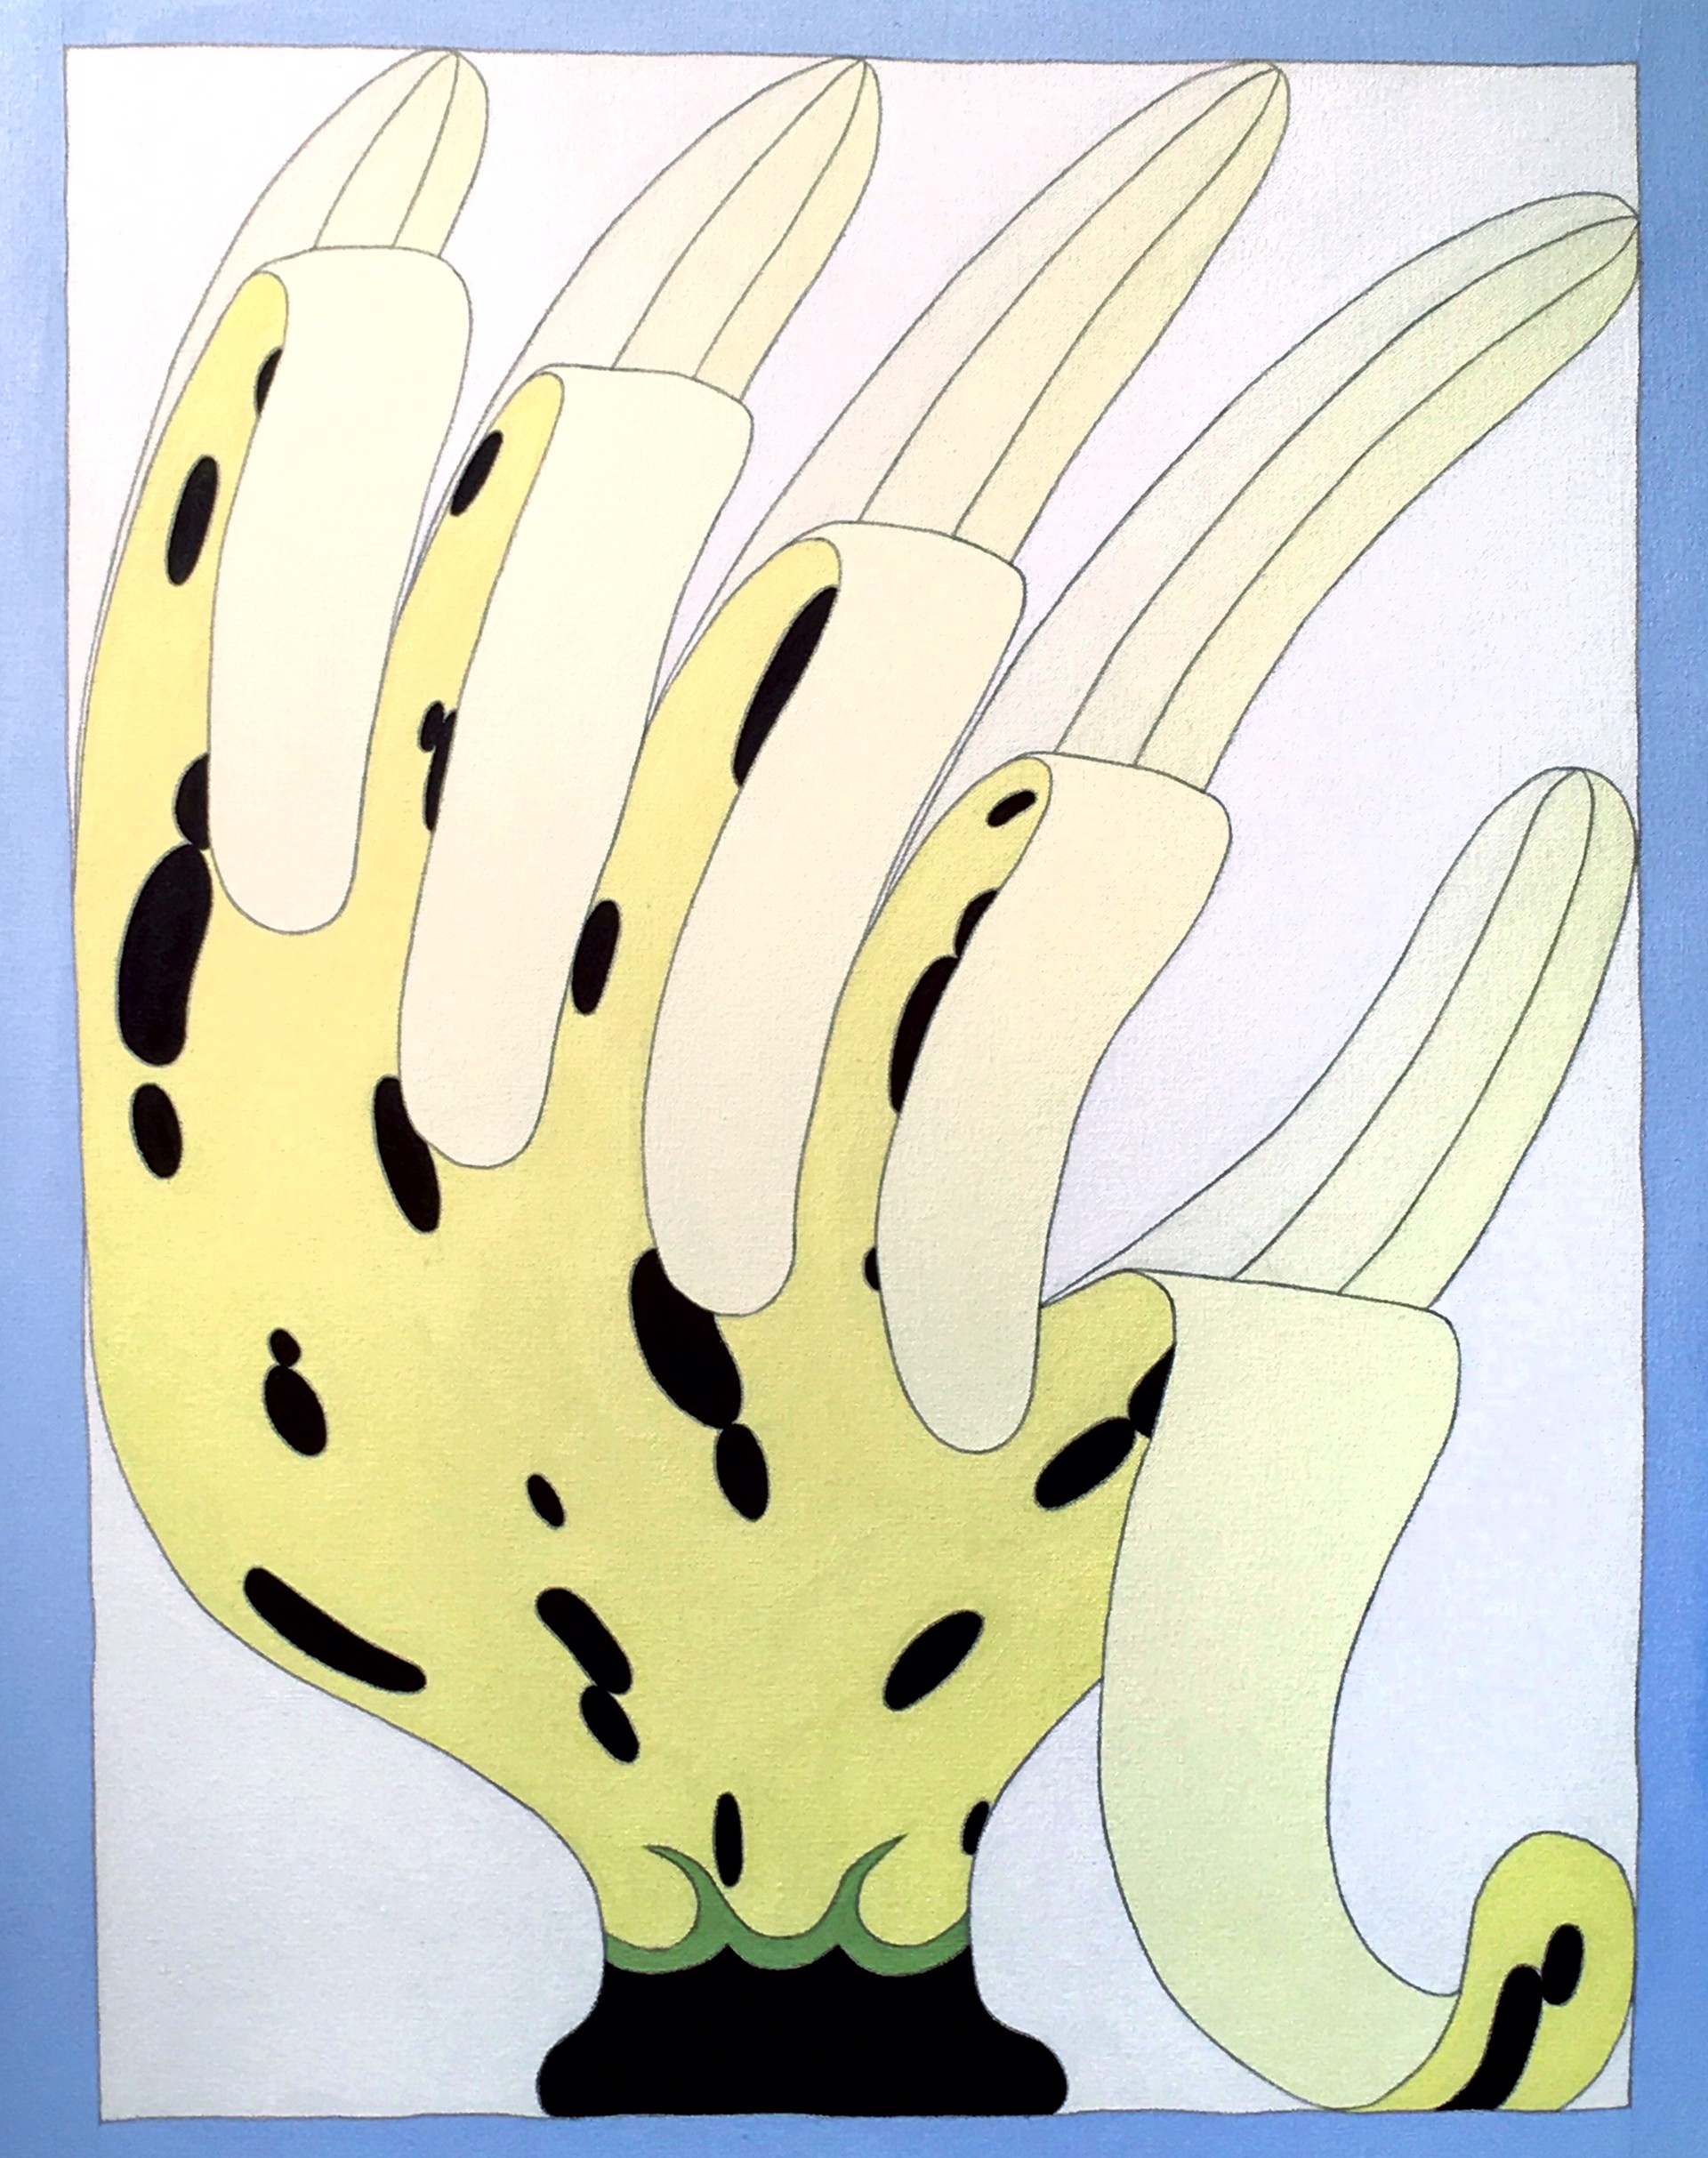 Banana Glove by David Onri Anderson